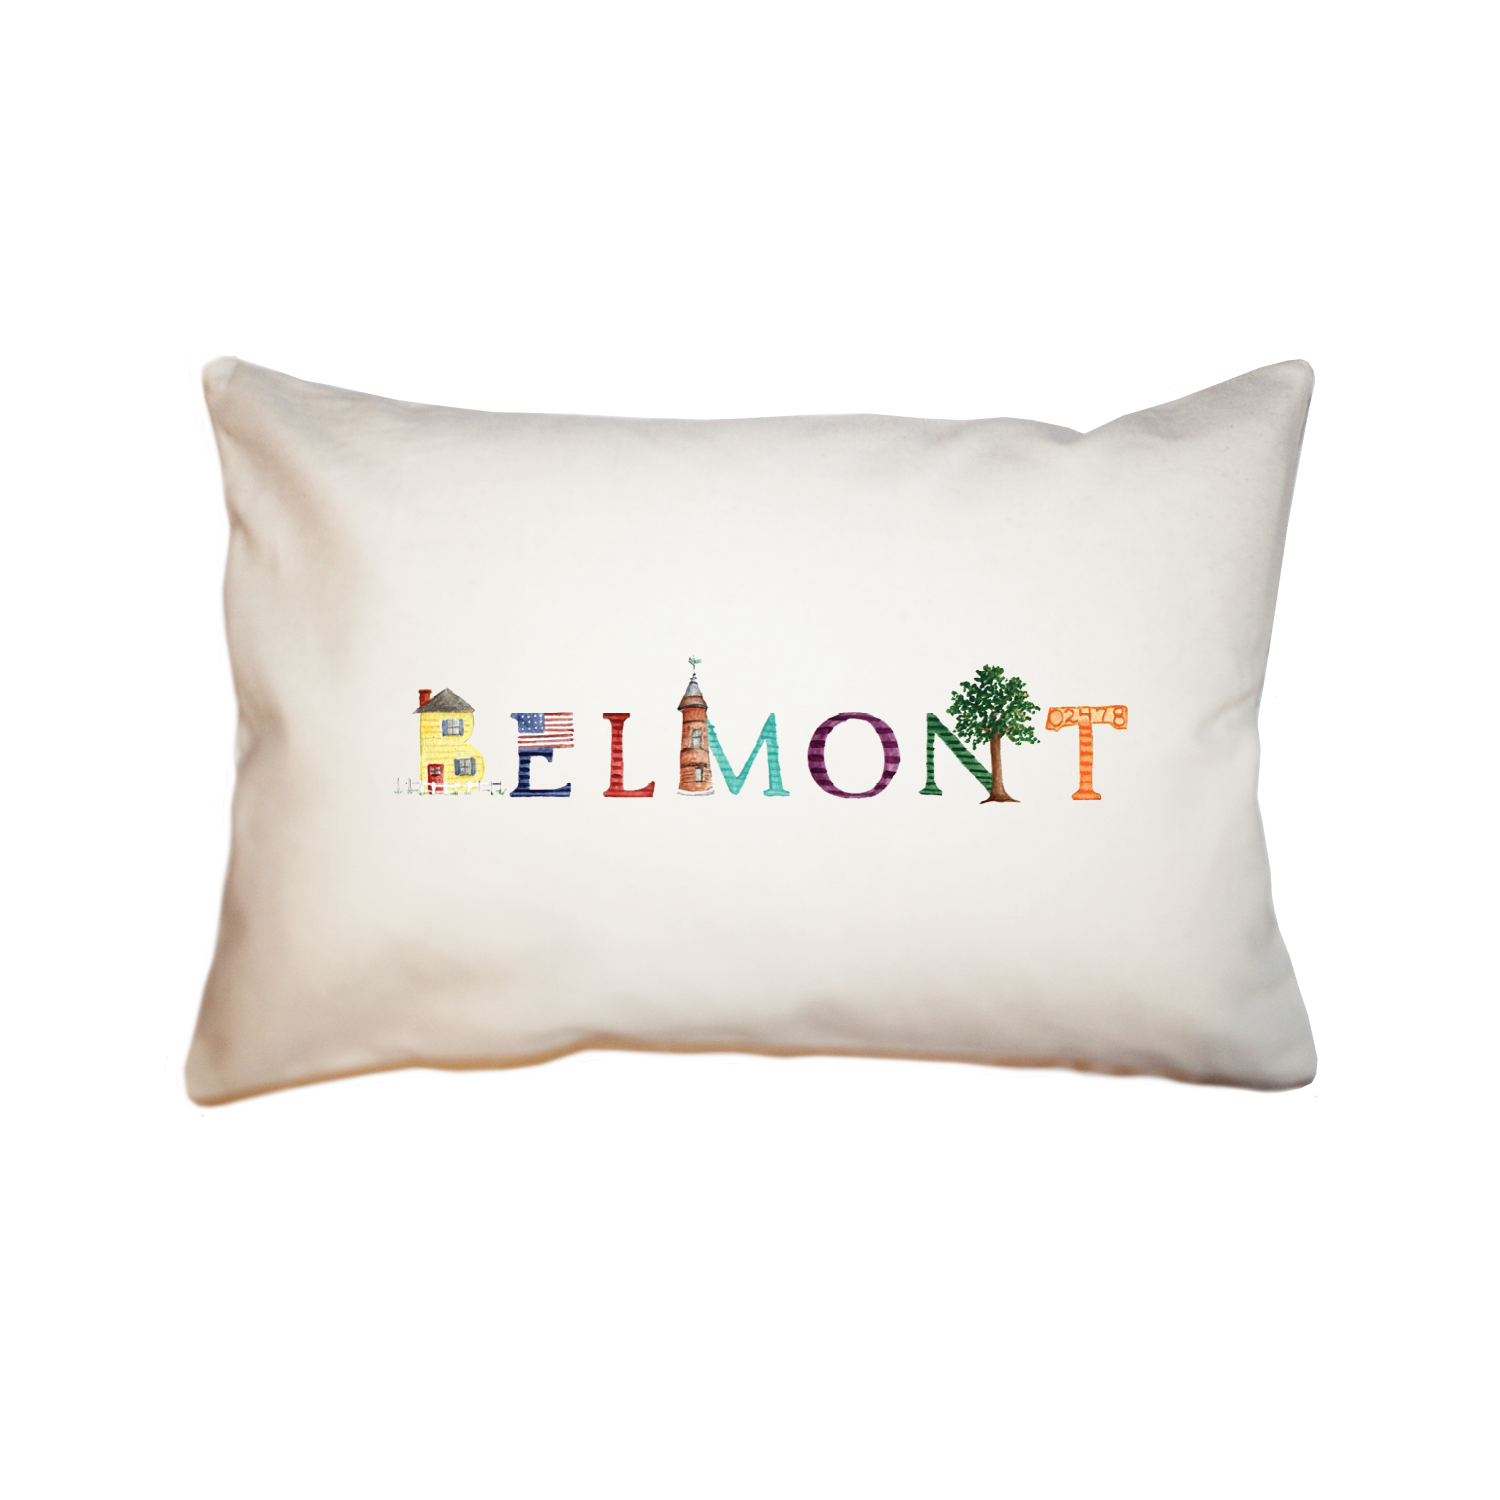 Belmont large rectangle pillow